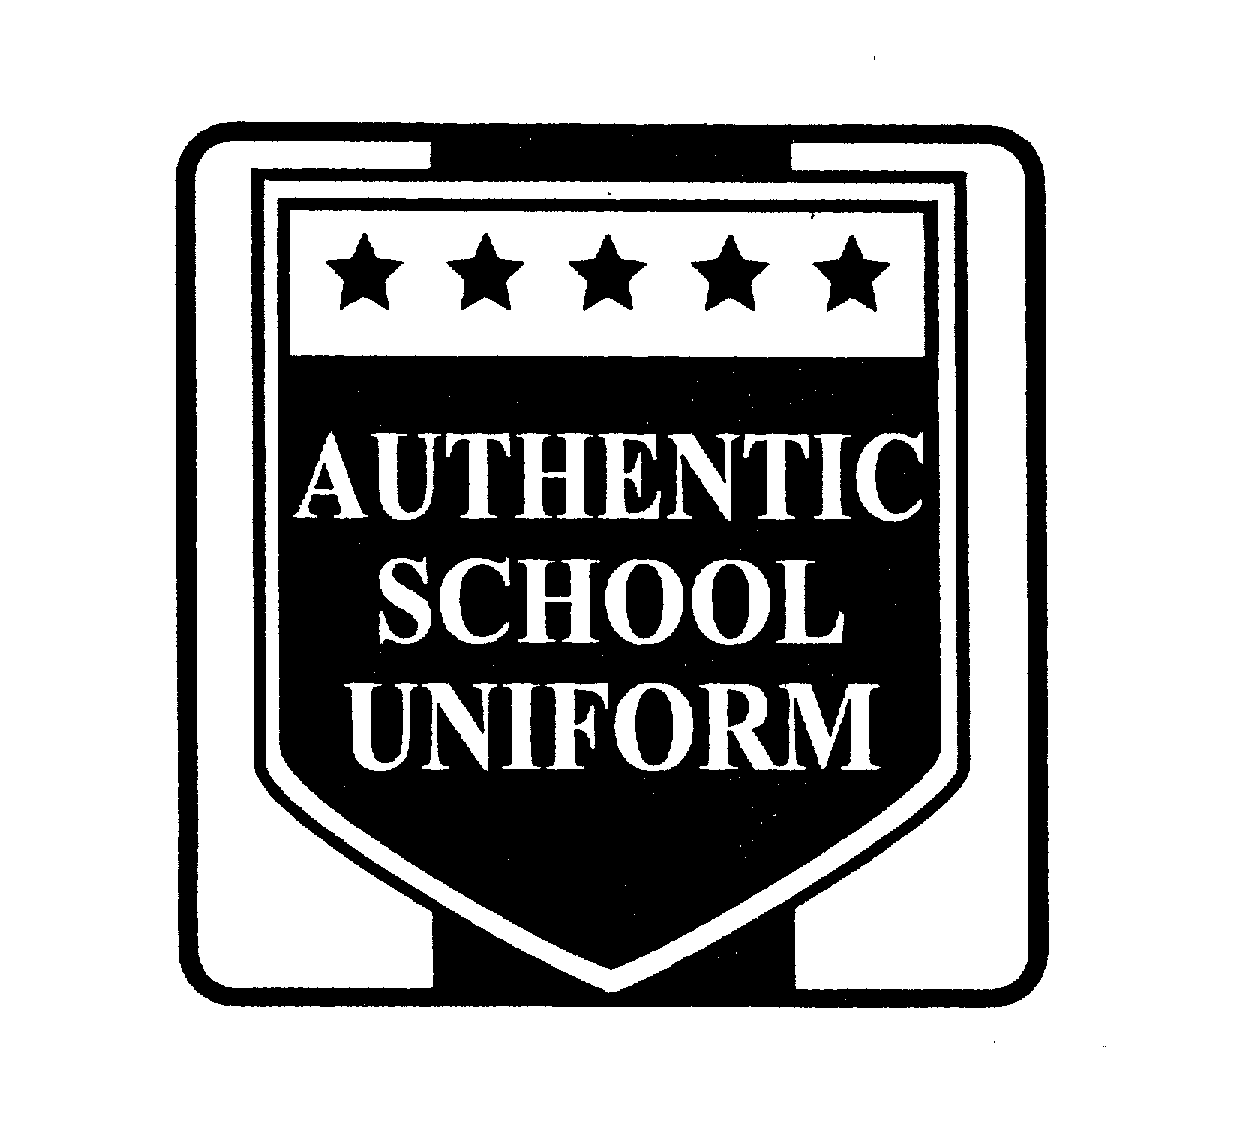 AUTHENTIC SCHOOL UNIFORM